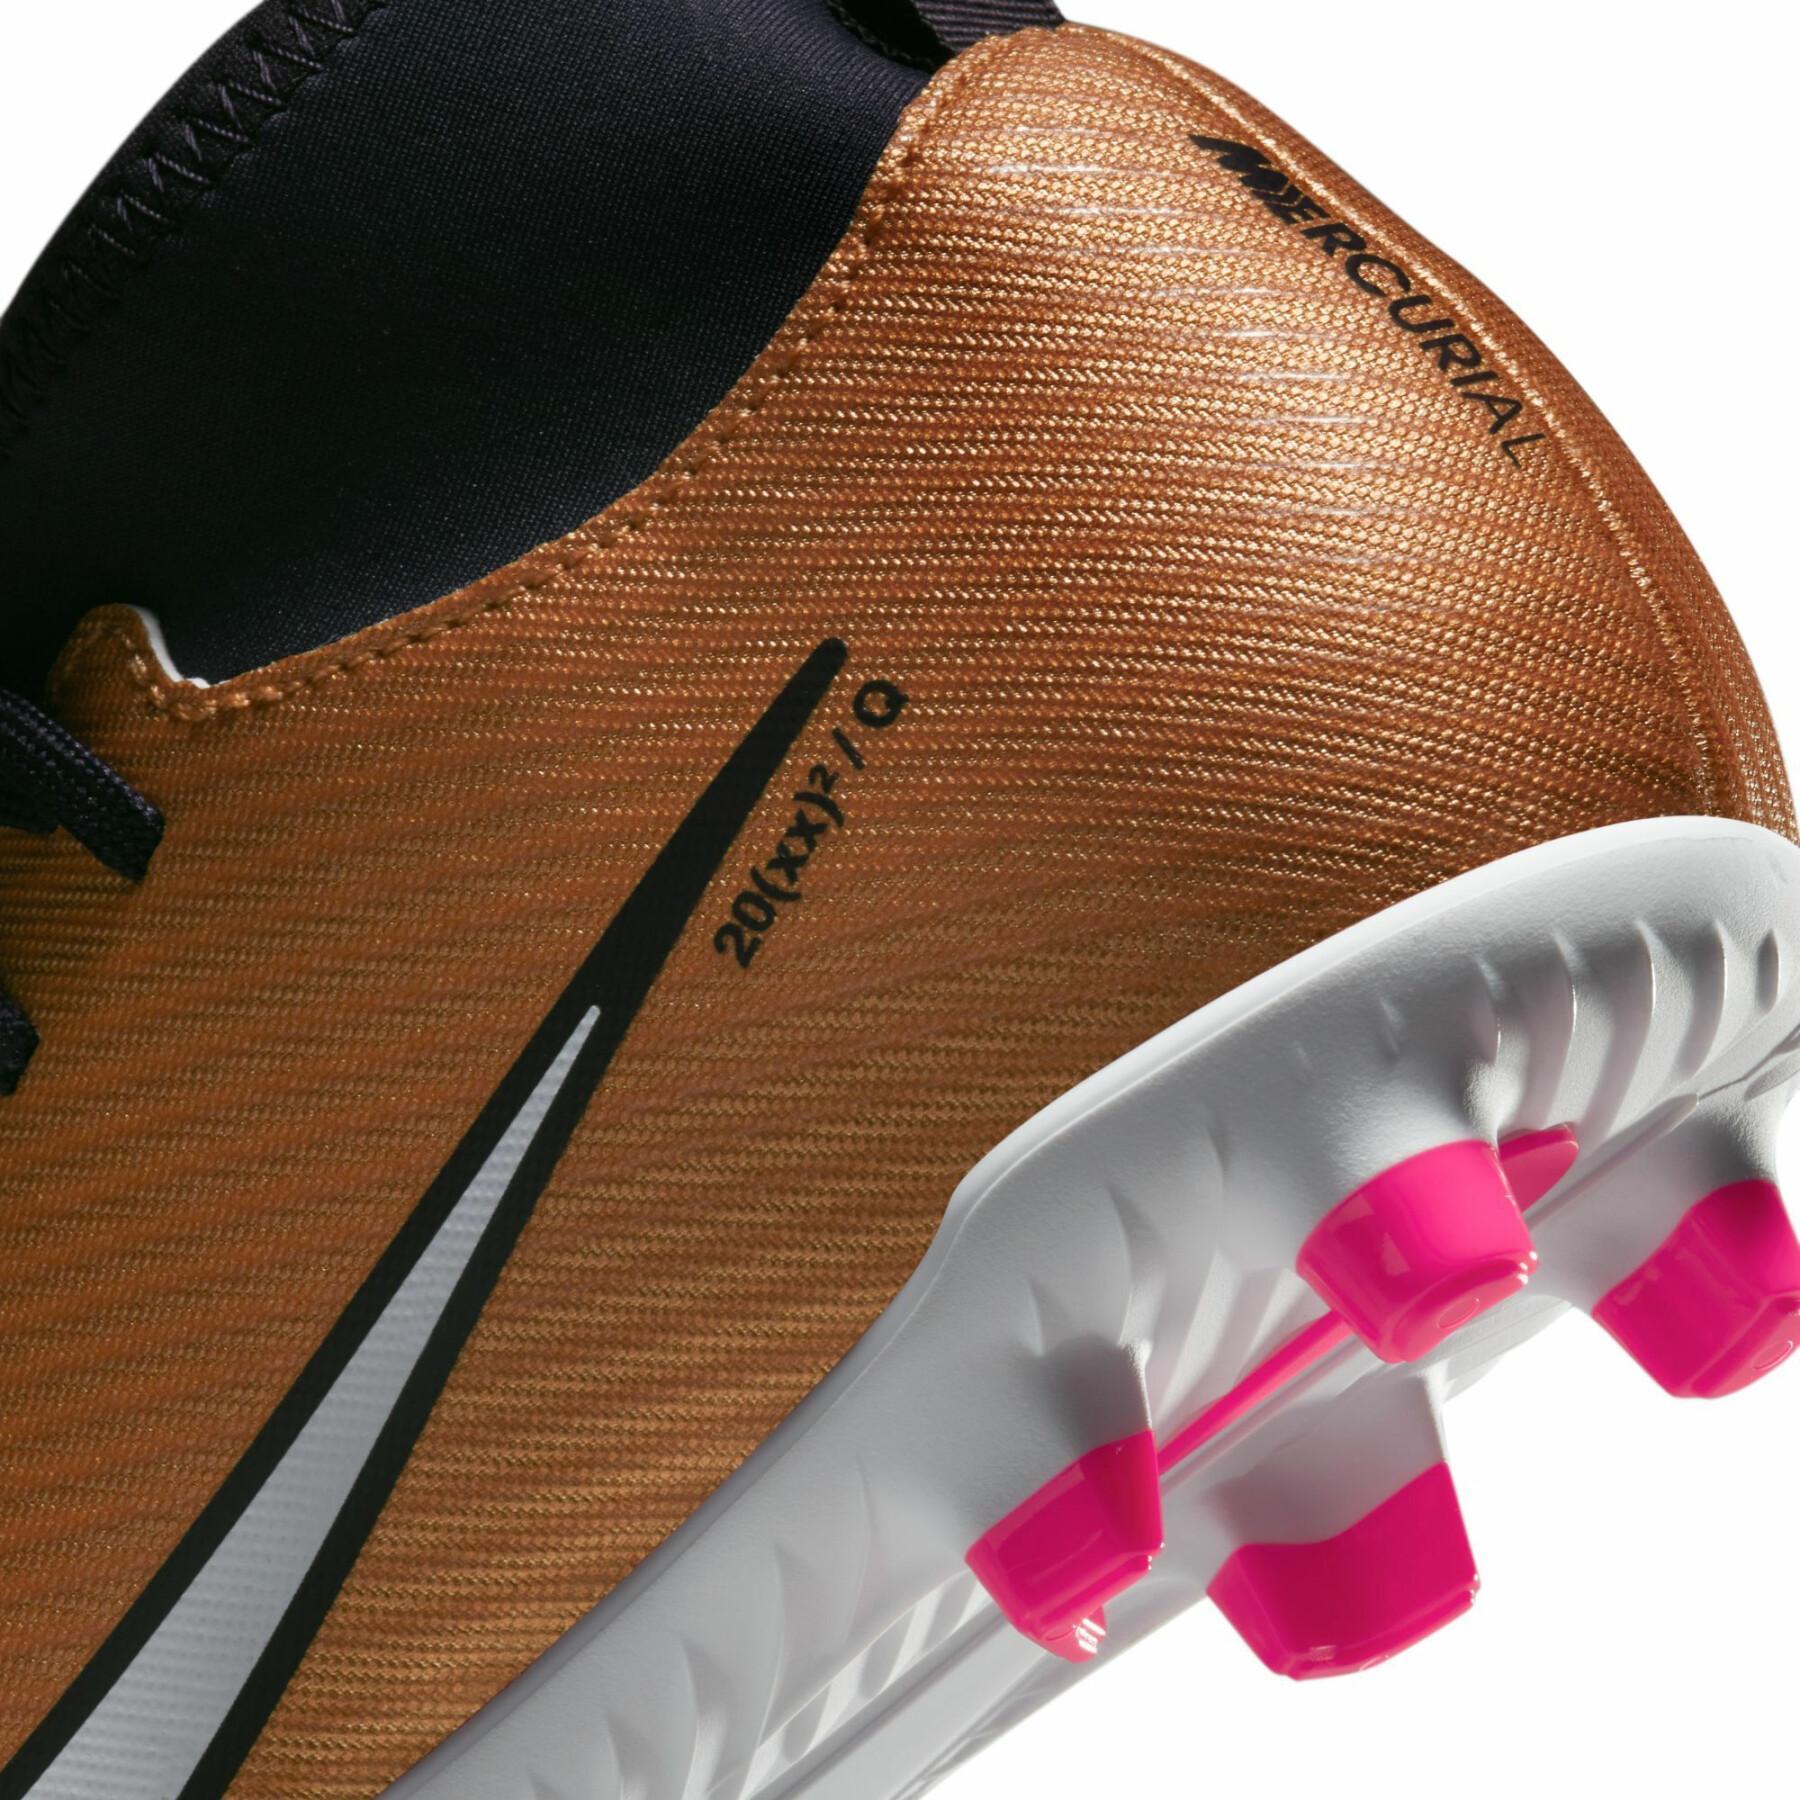 Chaussures de football enfant Nike Mercurial Superfly 9 Club FG/MG - Generation Pack